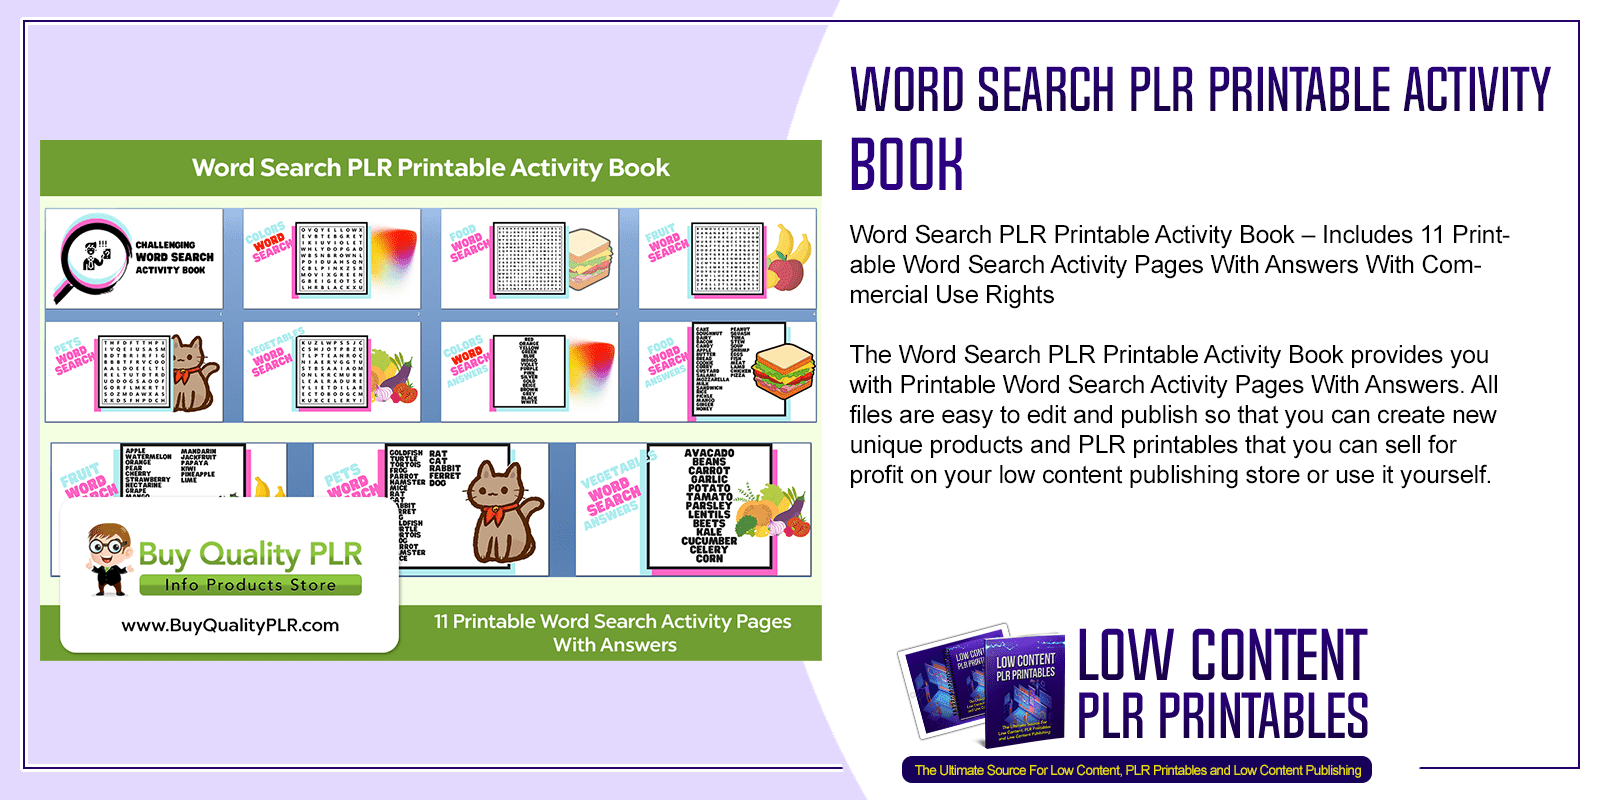 Word Search PLR Printable Activity Book